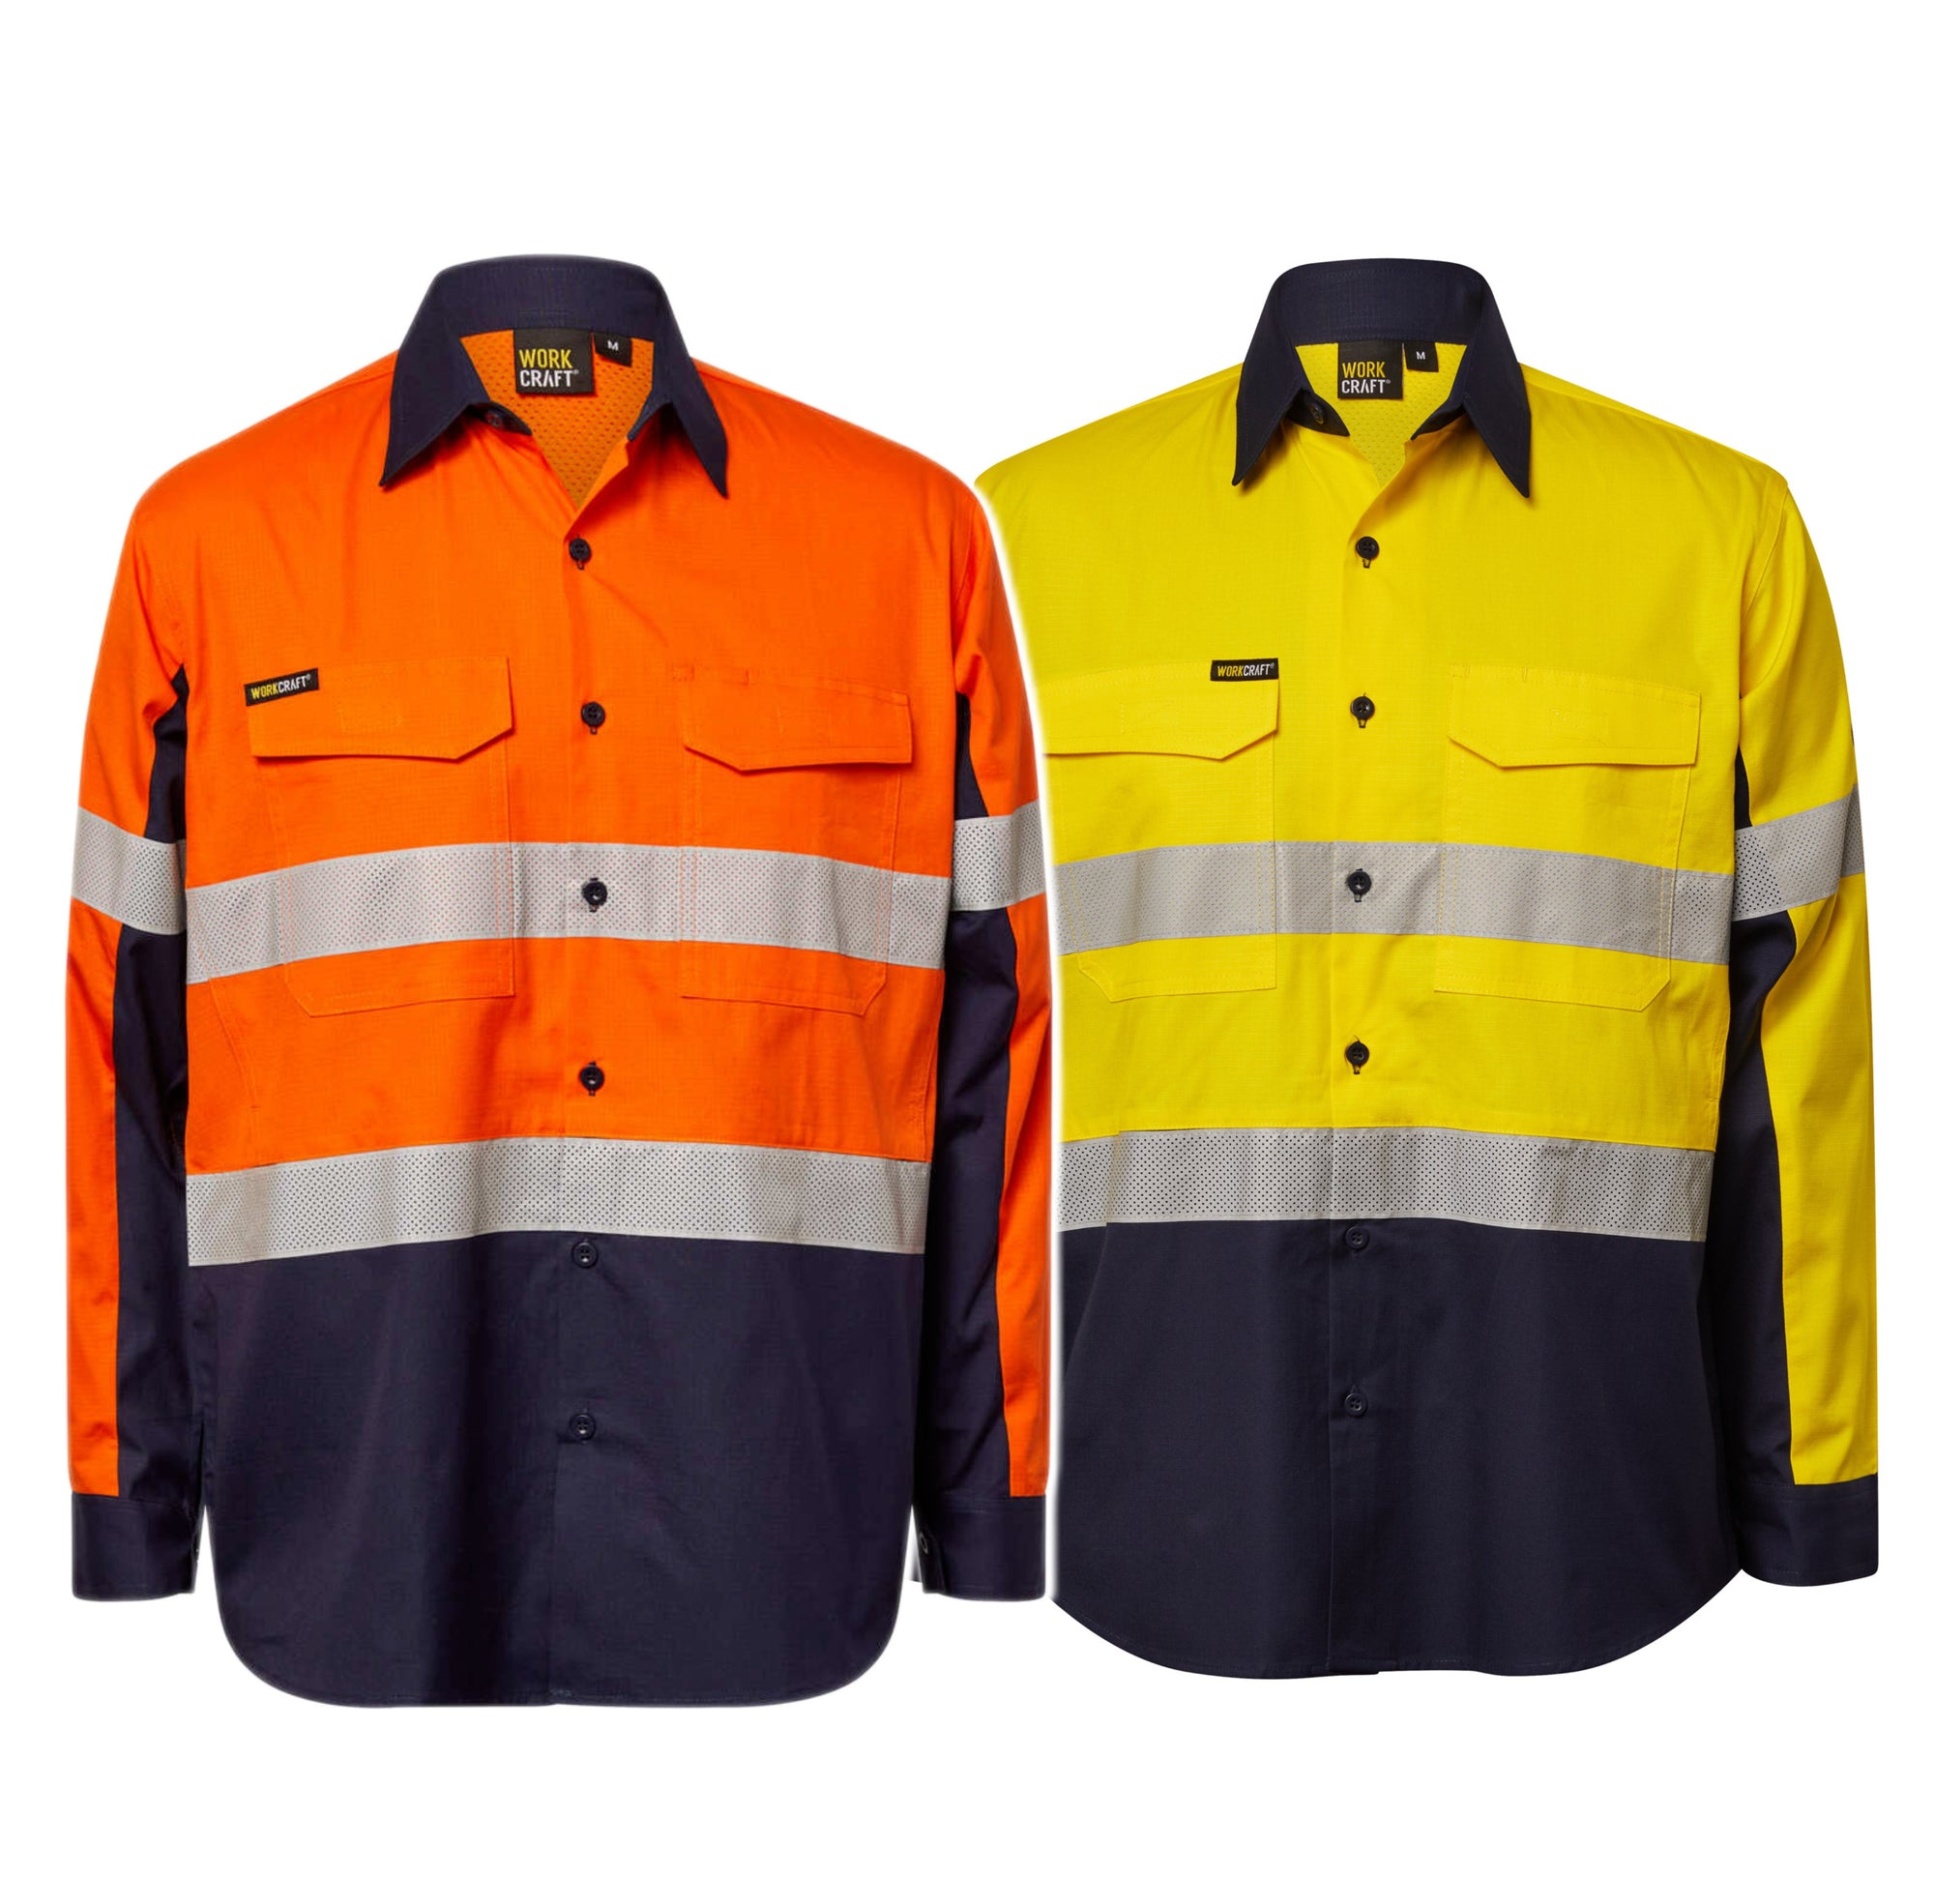 WS6068 custom reflective ripstop tradie work shirt